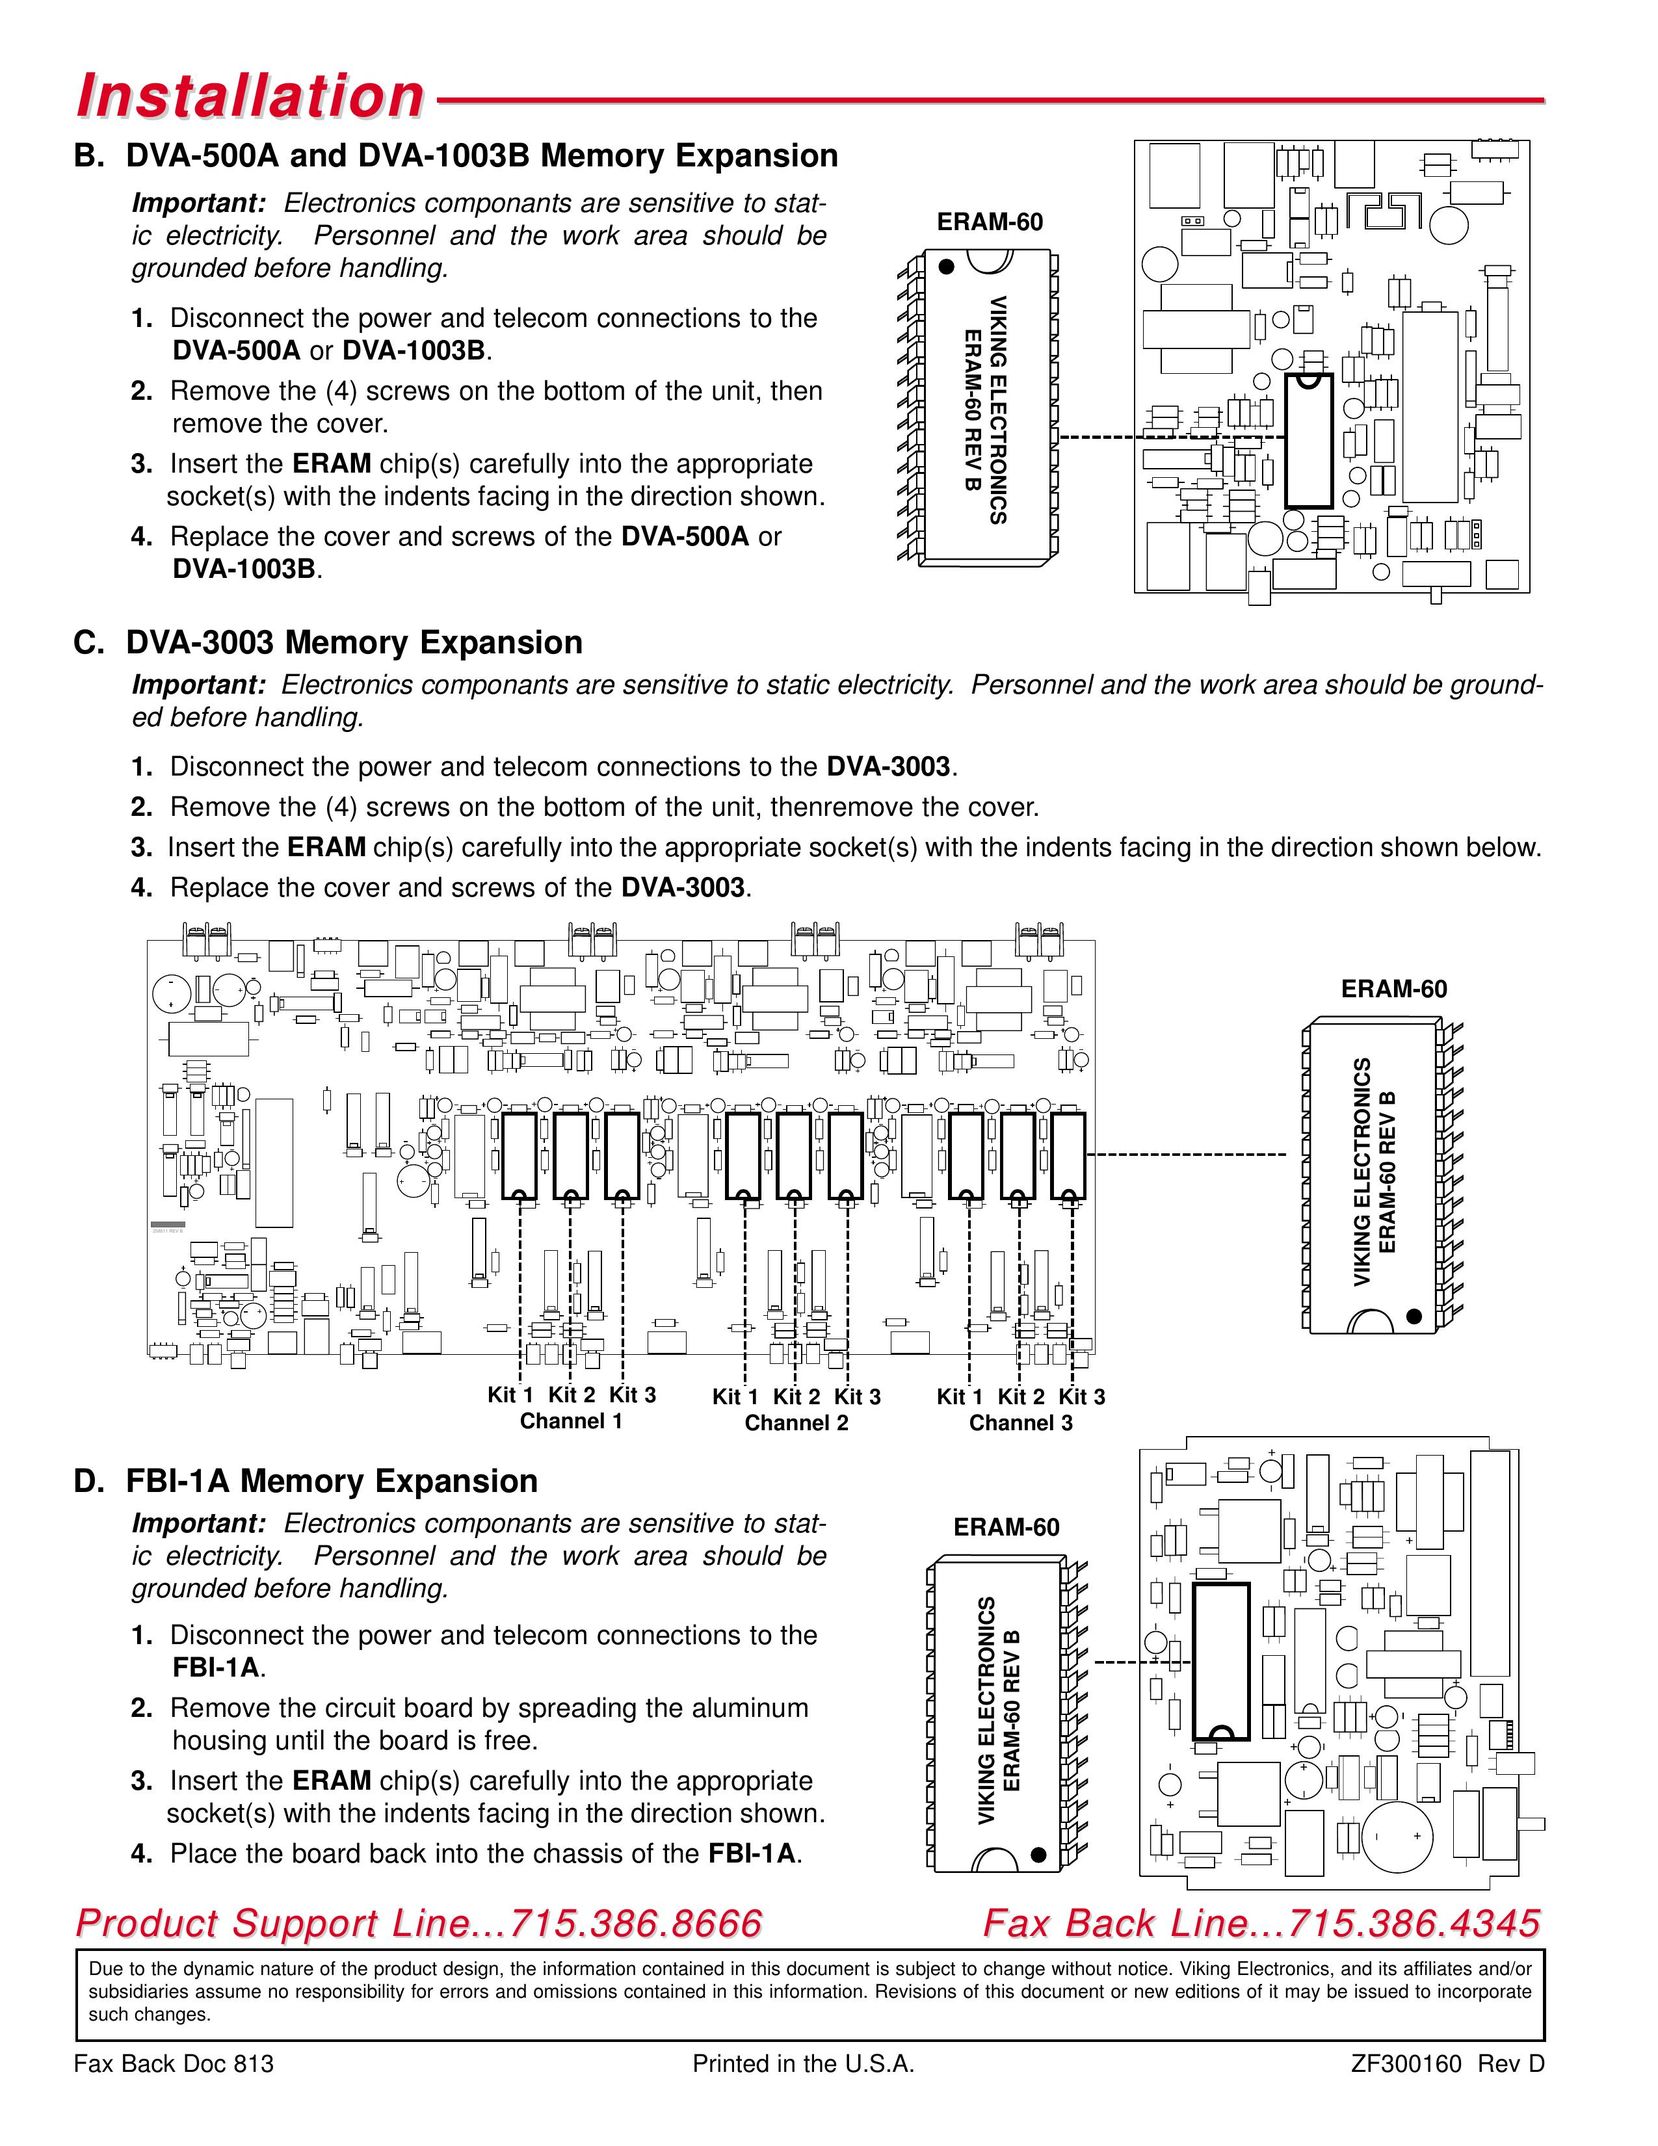 Viking Electronics DVA-3003 Video Gaming Accessories User Manual (Page 2)